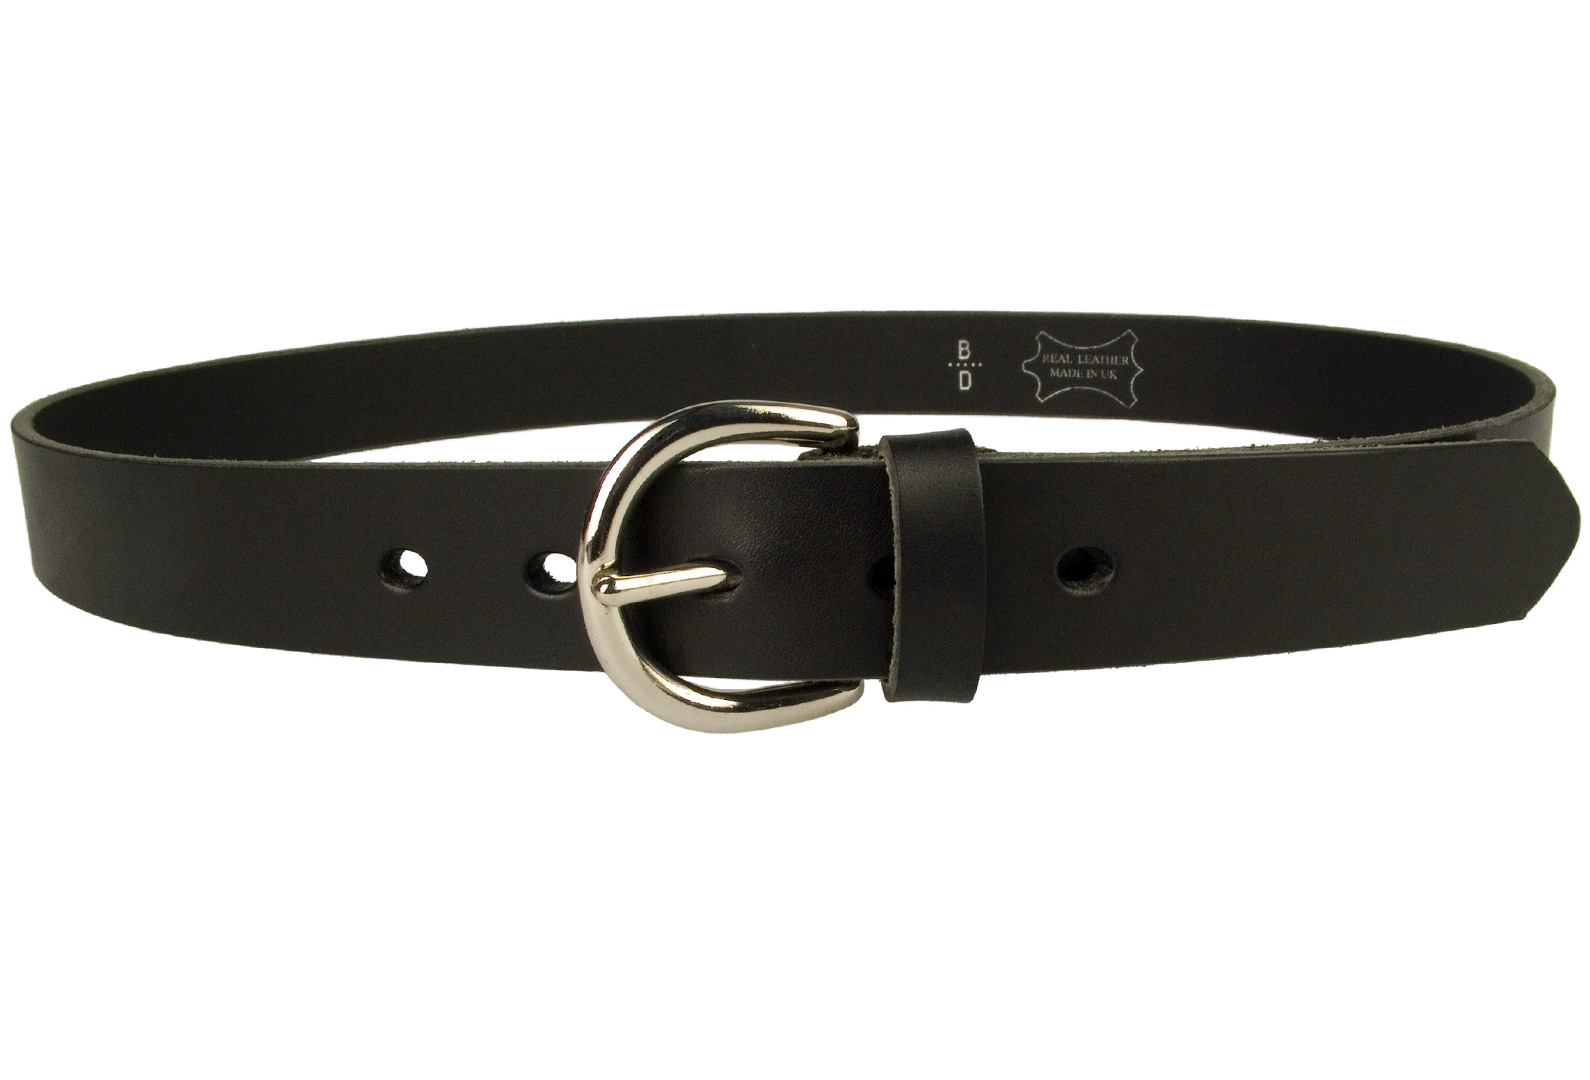 https://www.belt-designs.com/wp-content/uploads/2019/10/Womens-Black-Leather-Belt-Made-In-UK-2.jpg